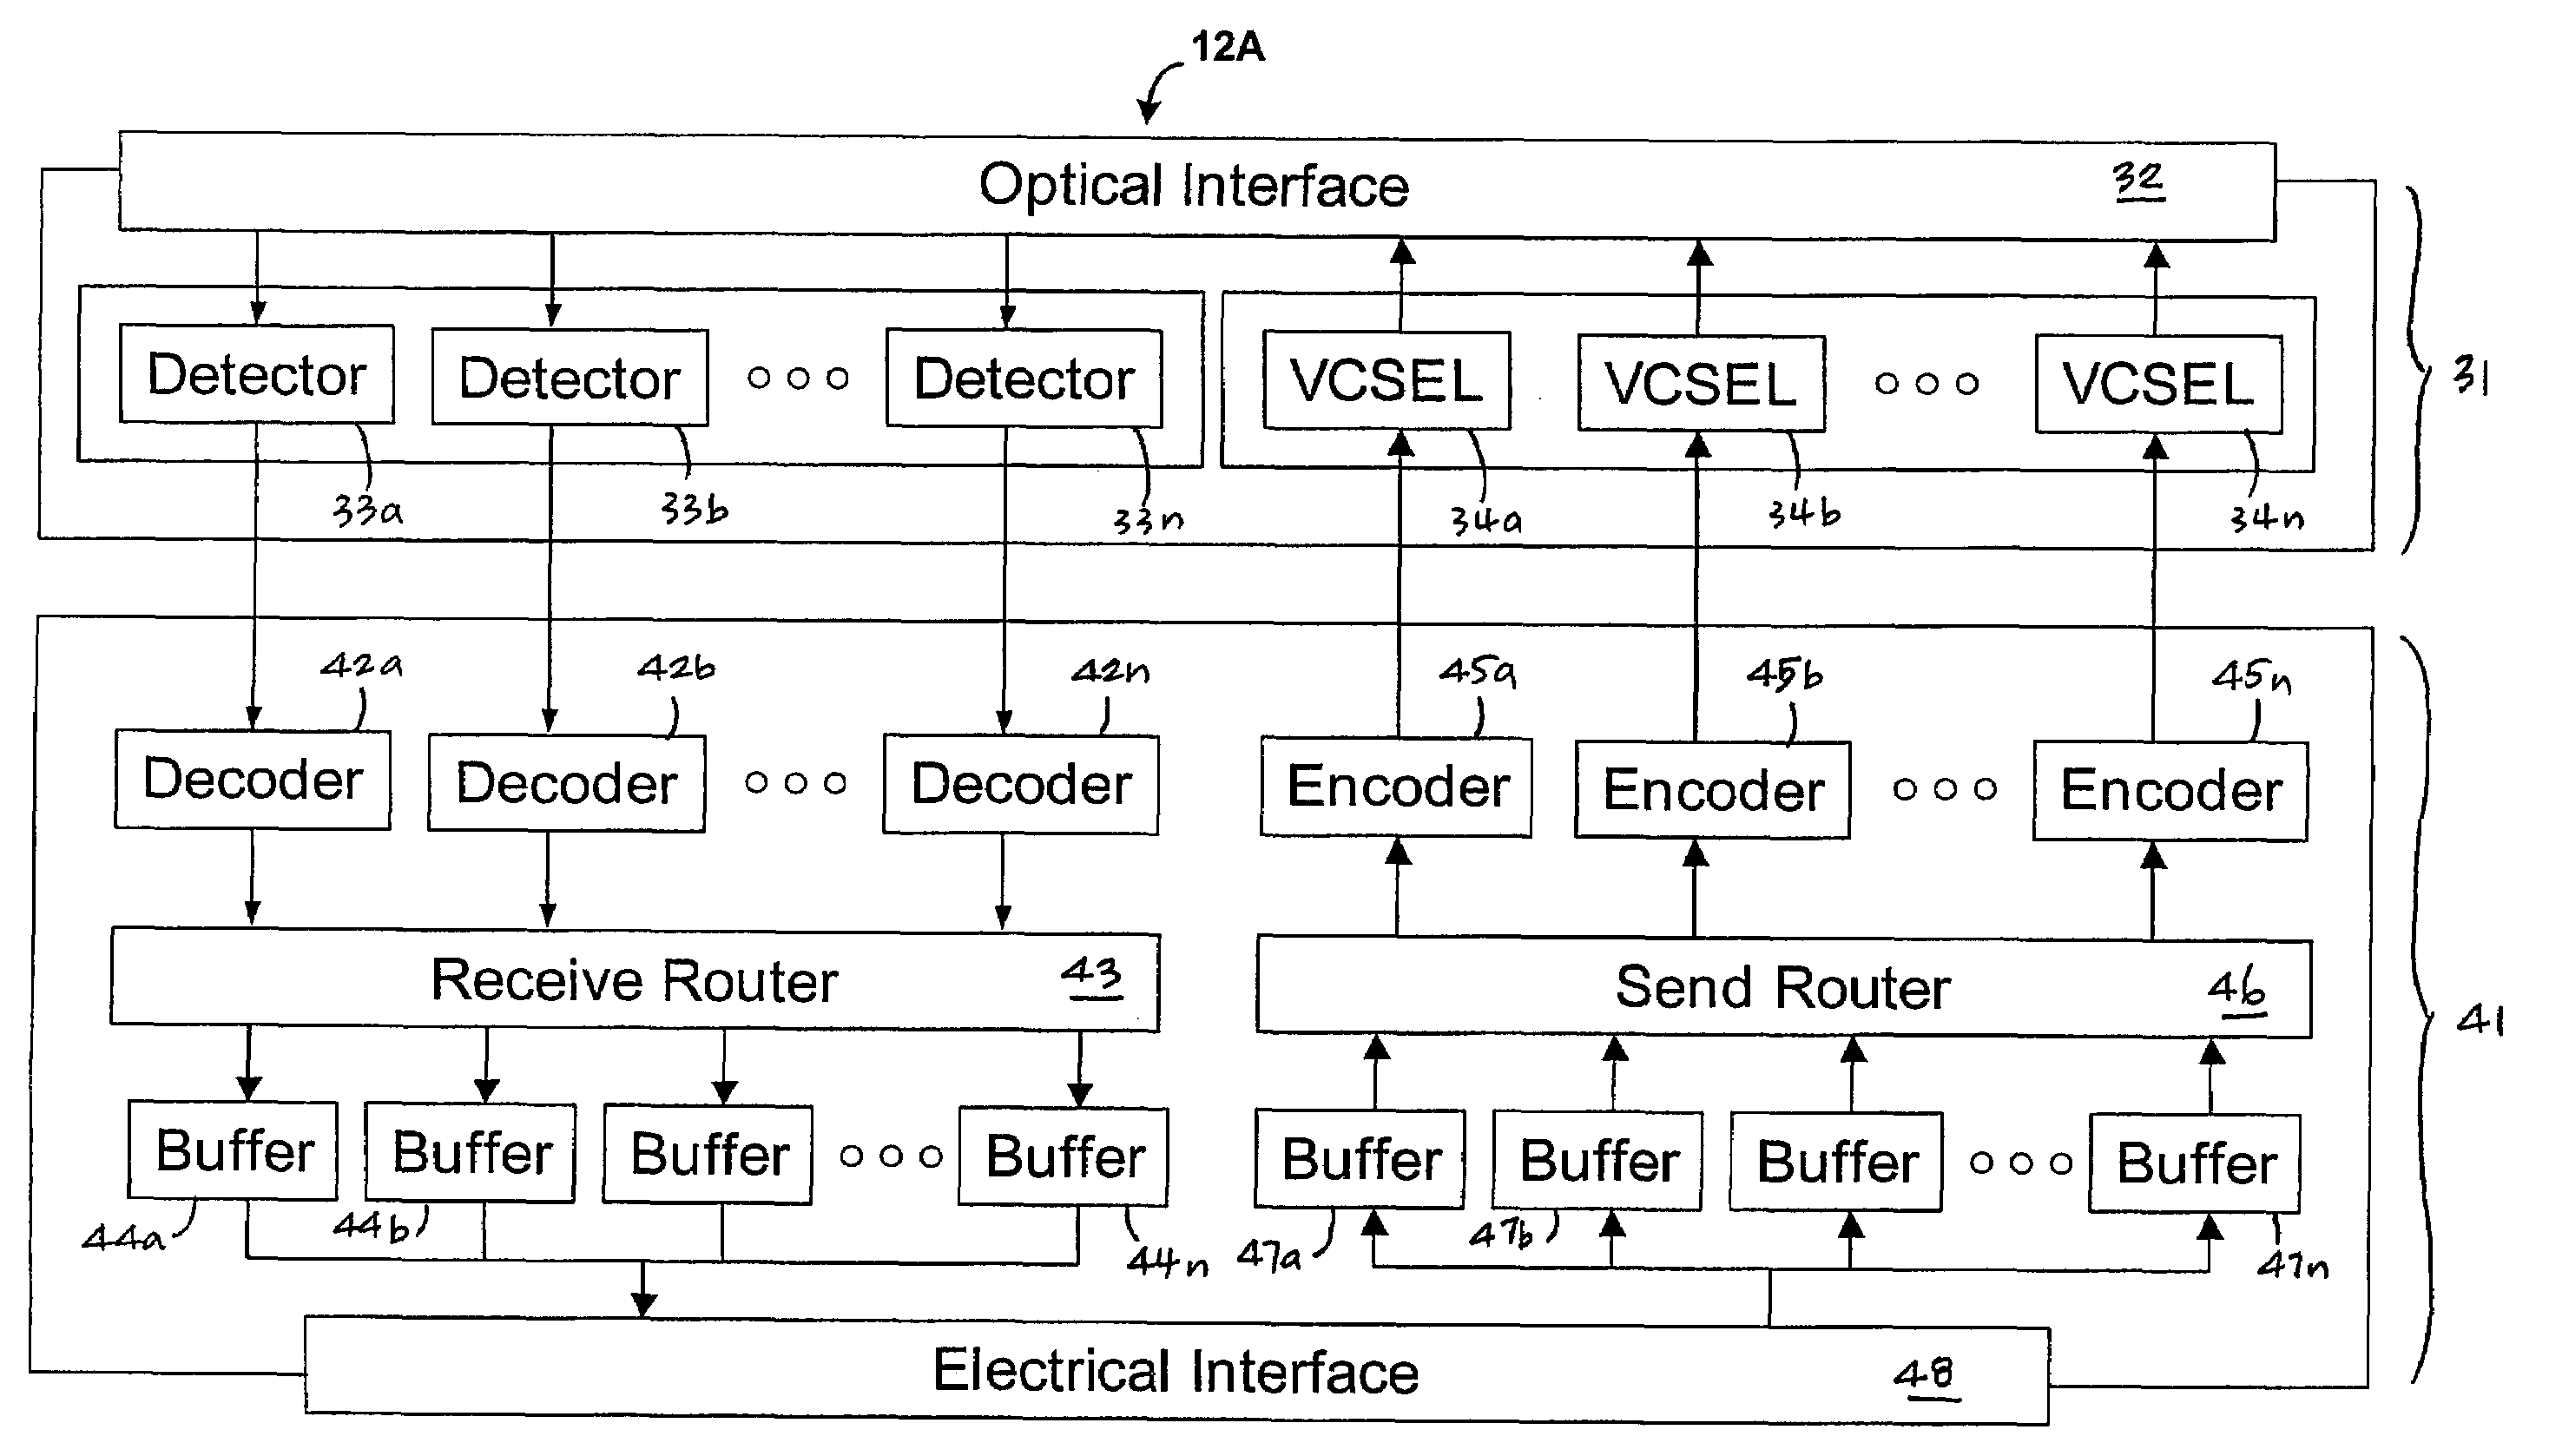 Data processing network having an optical network interface